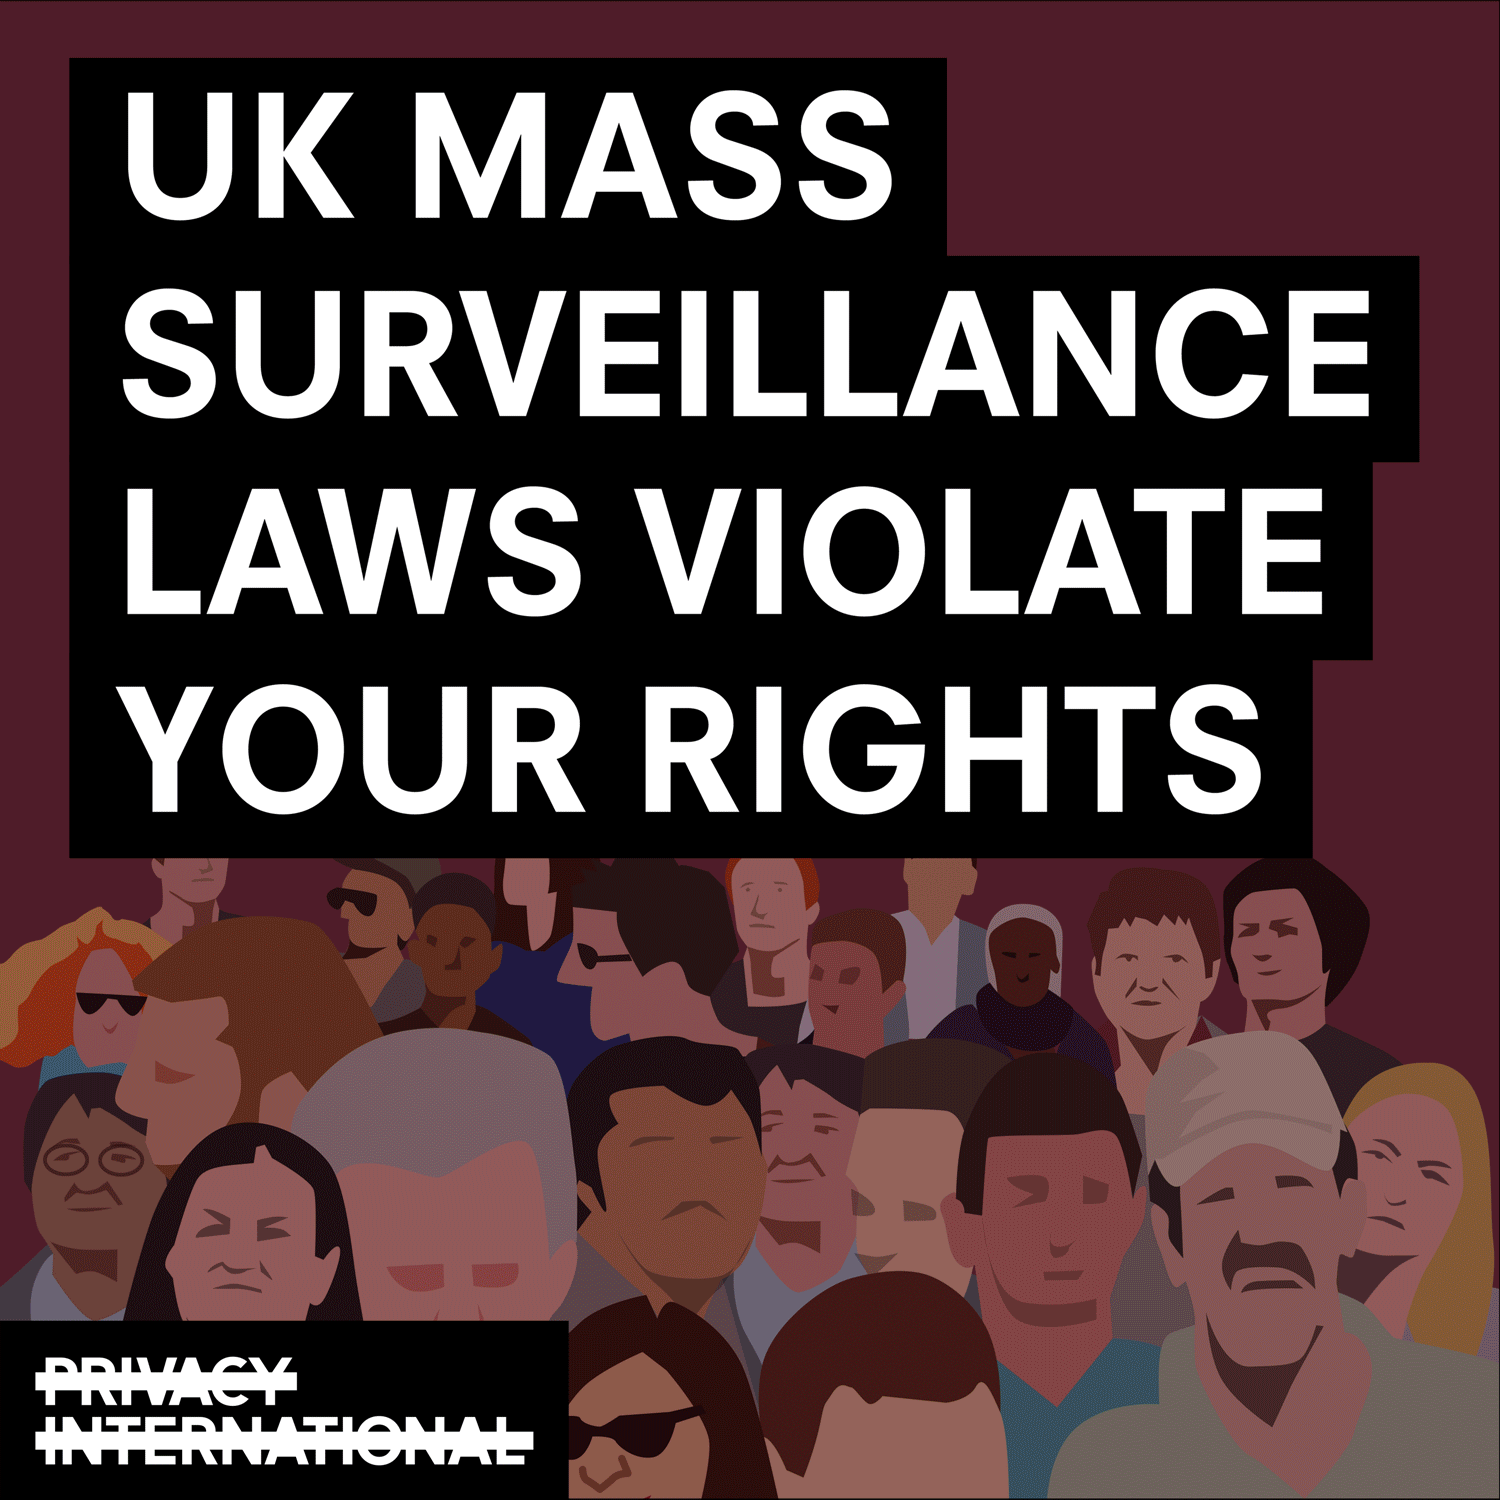 UK mass surveillance violates your rights